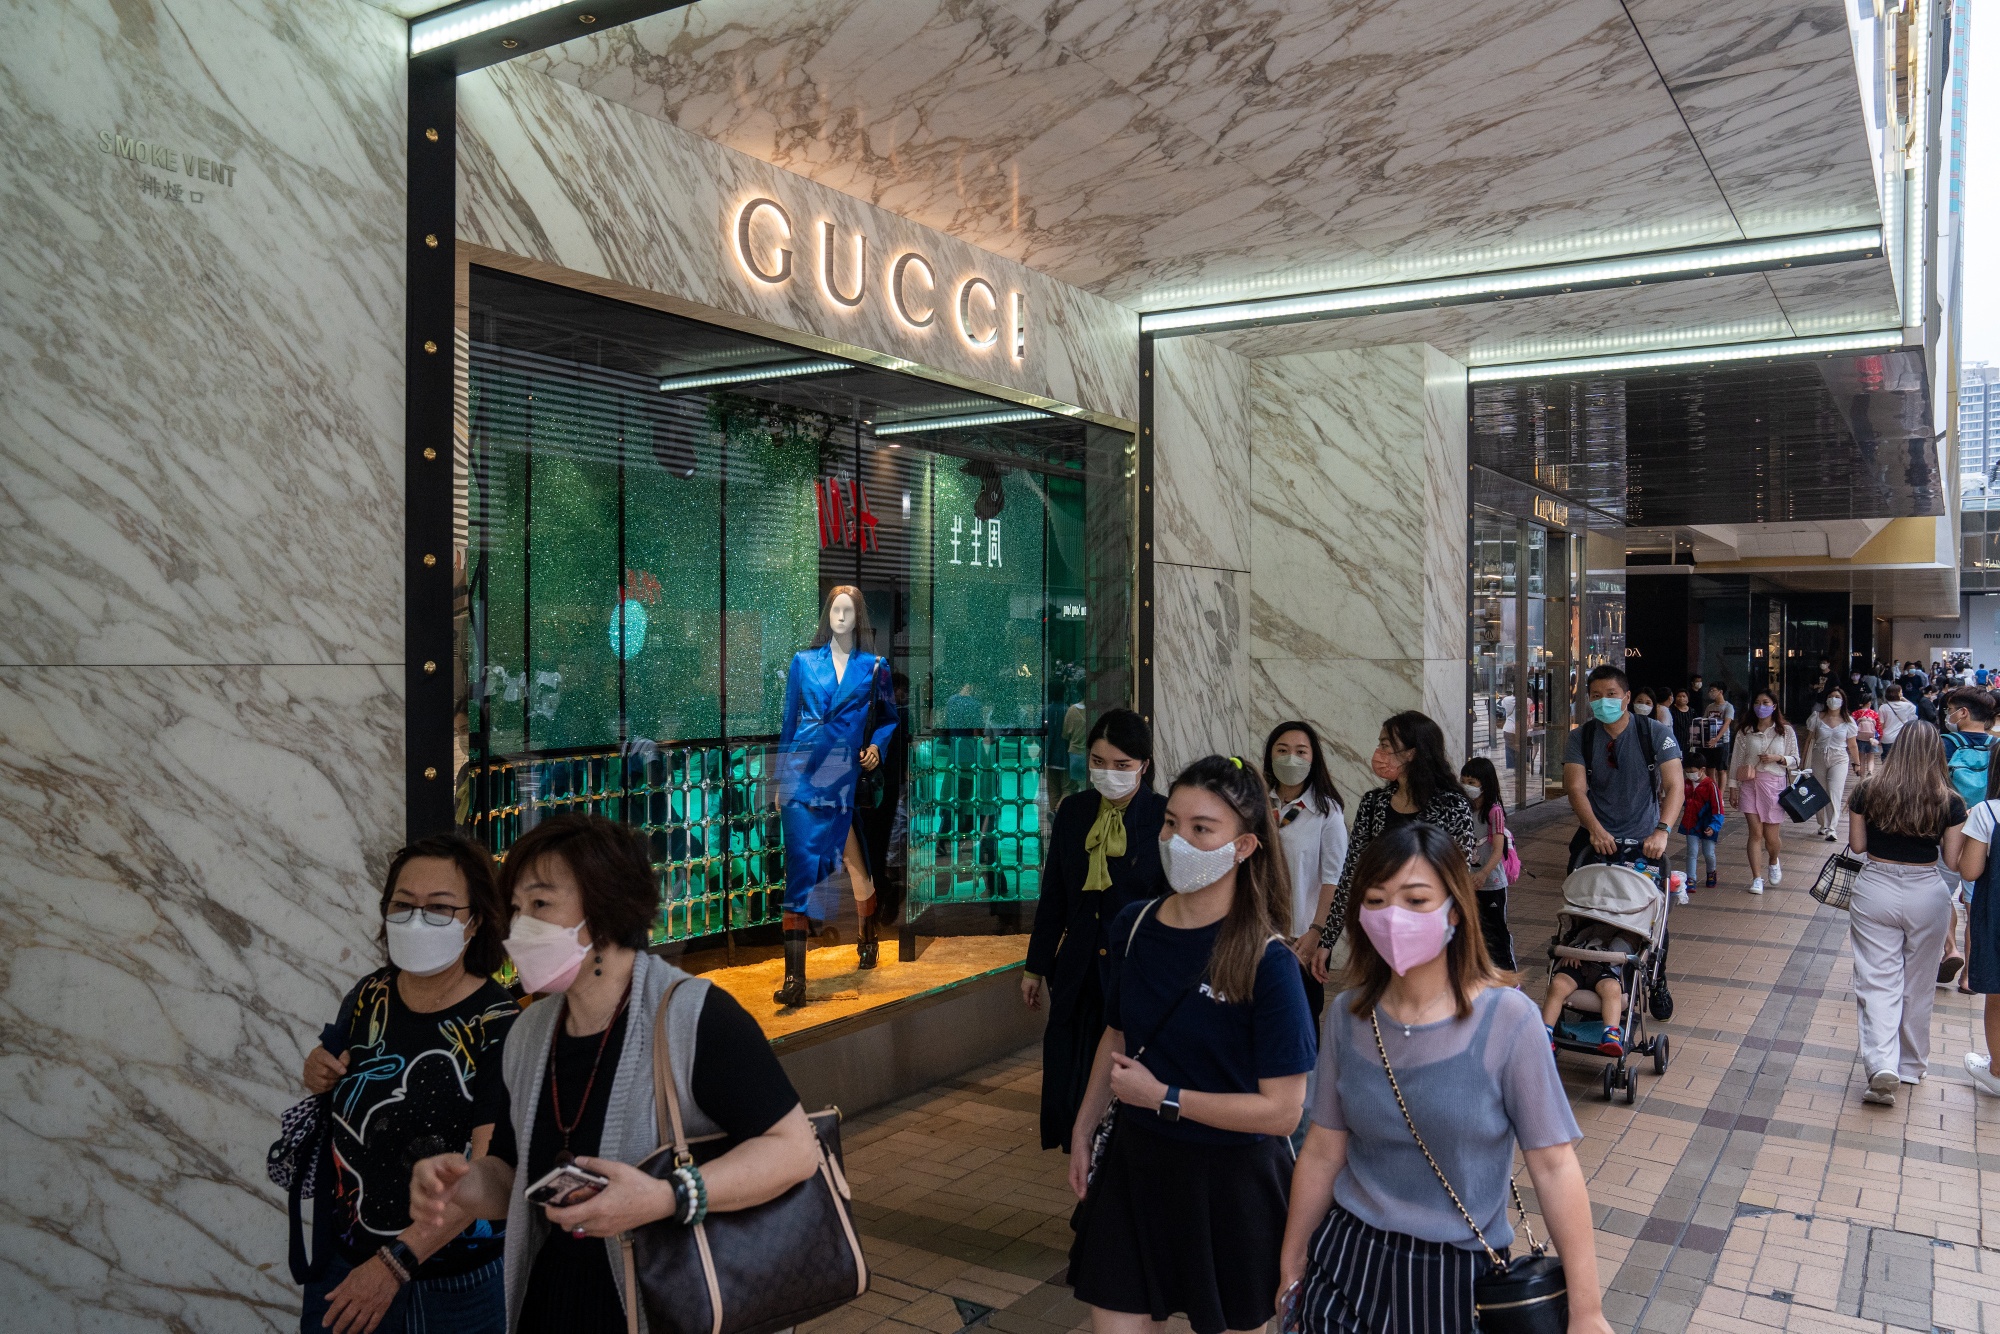 Louis Vuitton Owner's Sales Jump as Chinese Splurge Again - BNN Bloomberg